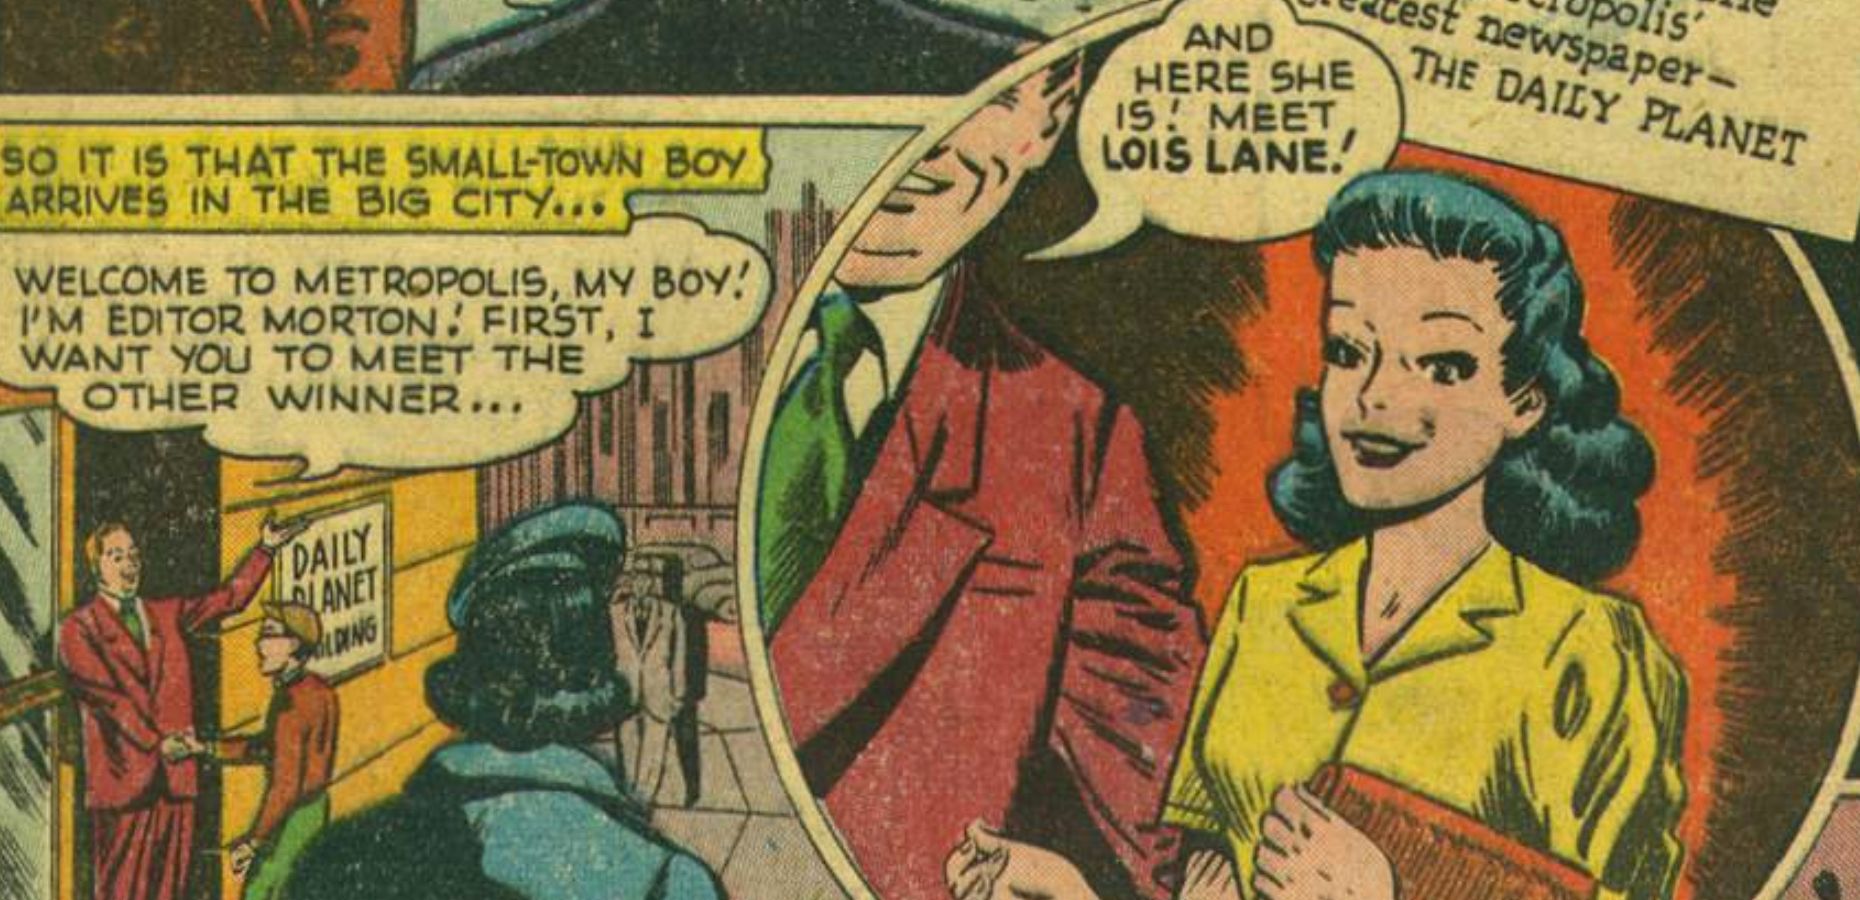 Lois And Clark Met as Teens in Adventure Comics Issue 128